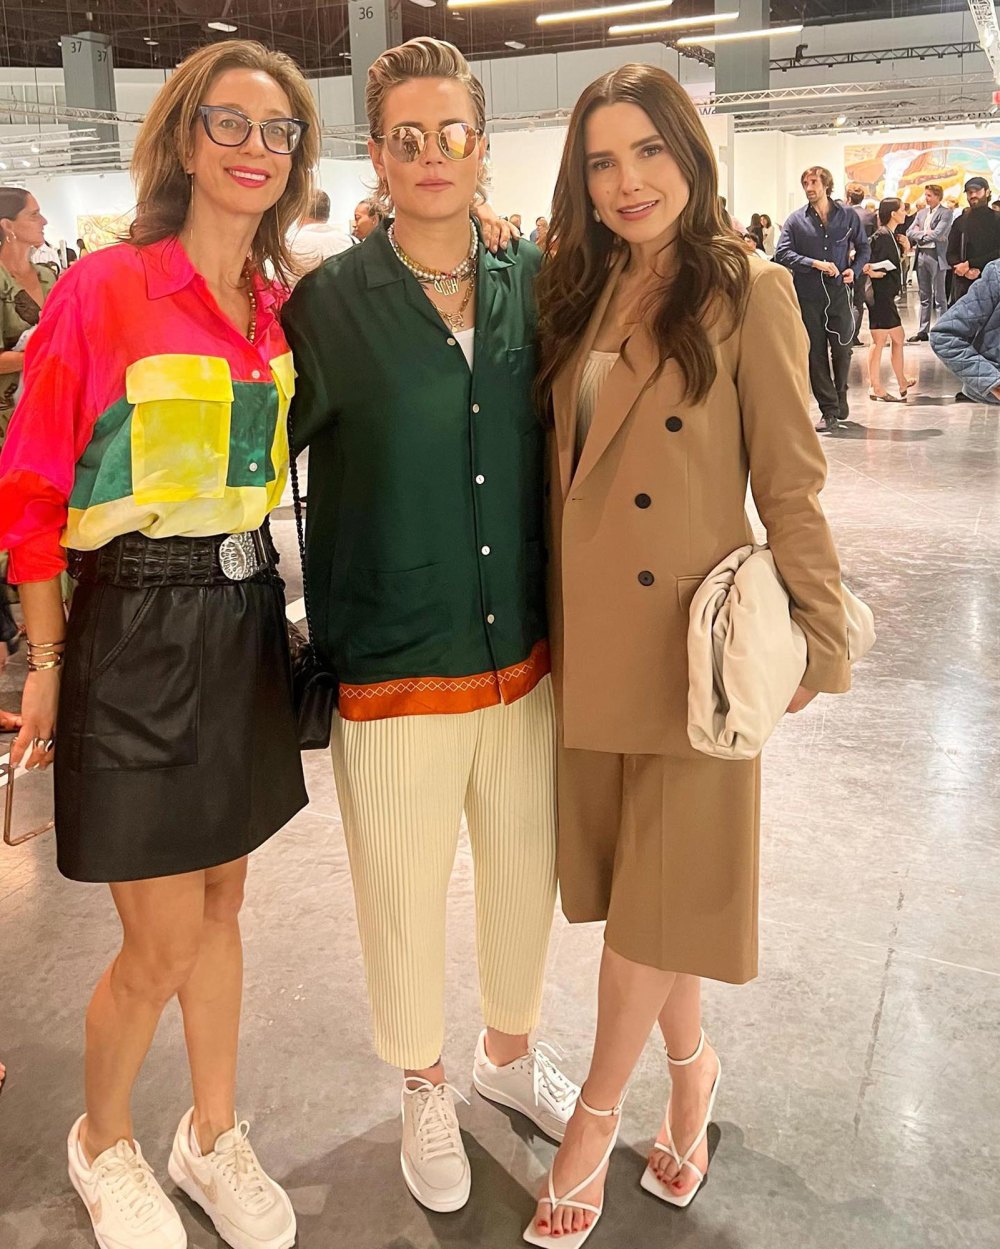 Sophia Bush and Soccer Star Ashlyn Harris Spotted Together at Art Basel Miami Beach